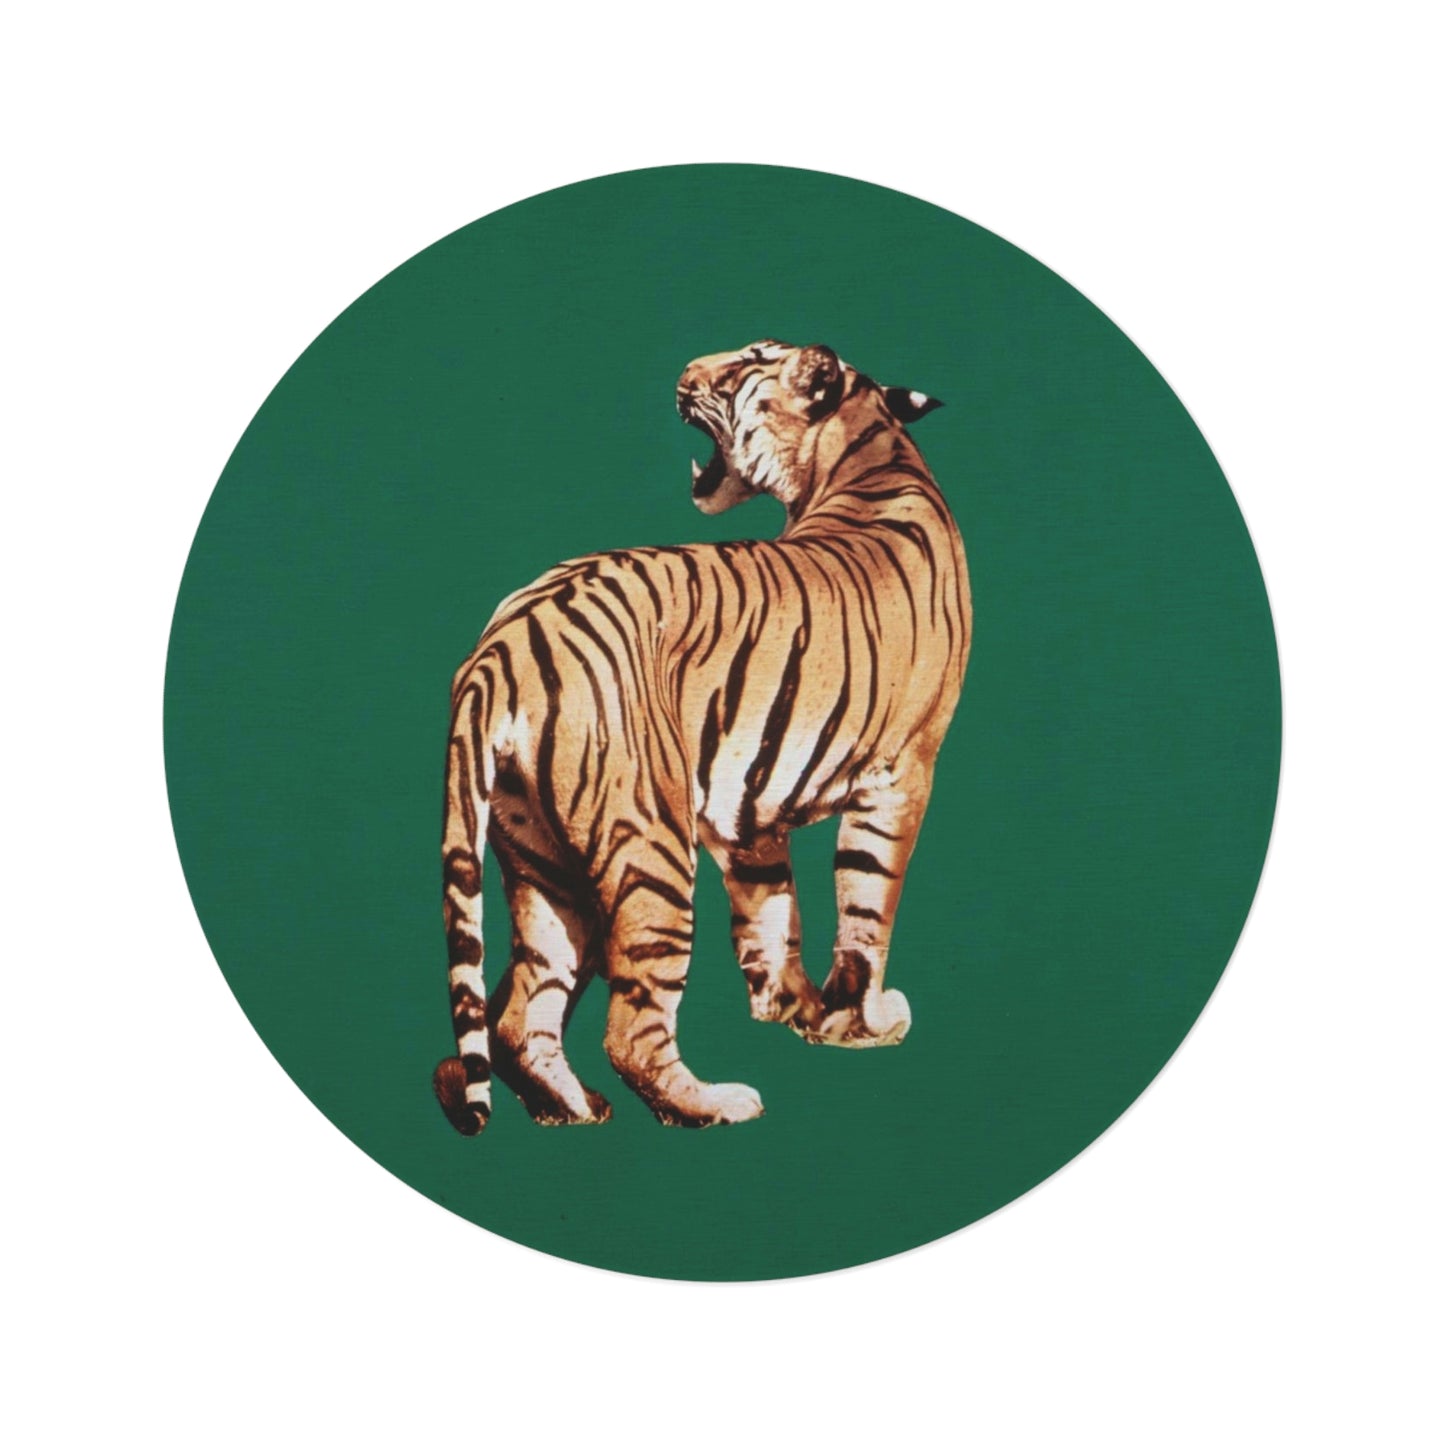 Emerald Tiger Round Rug